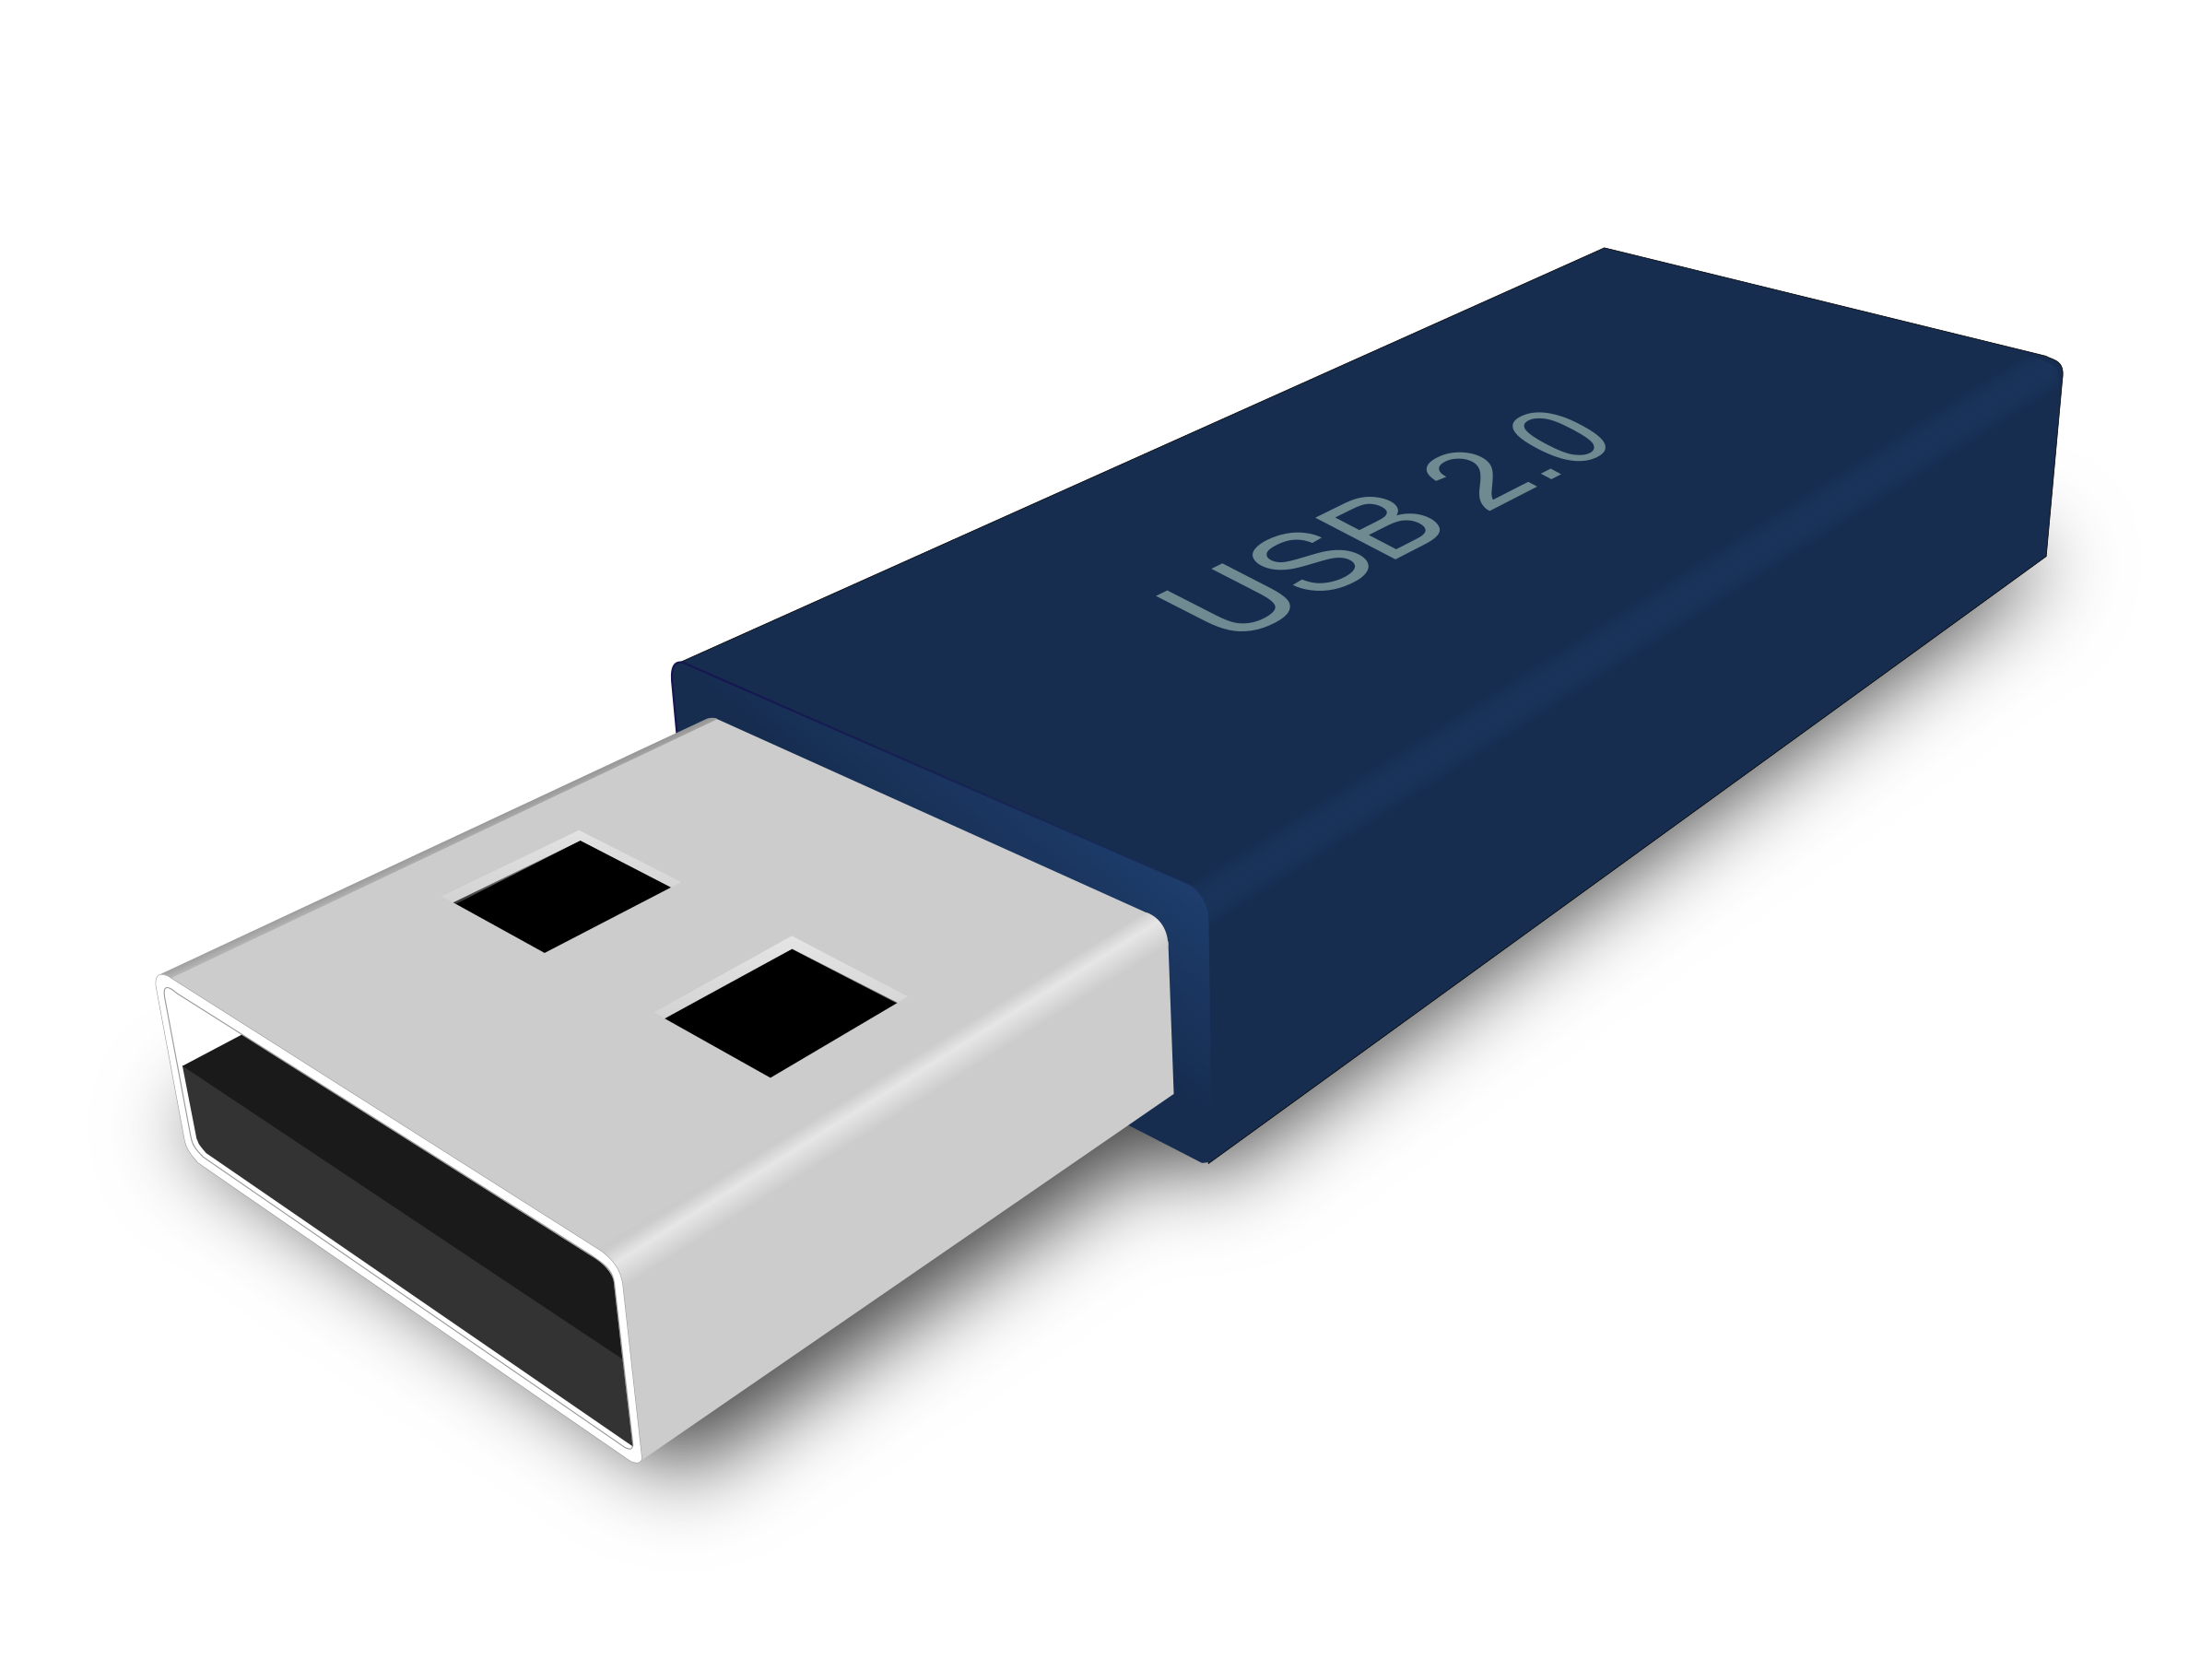 USB Flash Drive PNG Images HD